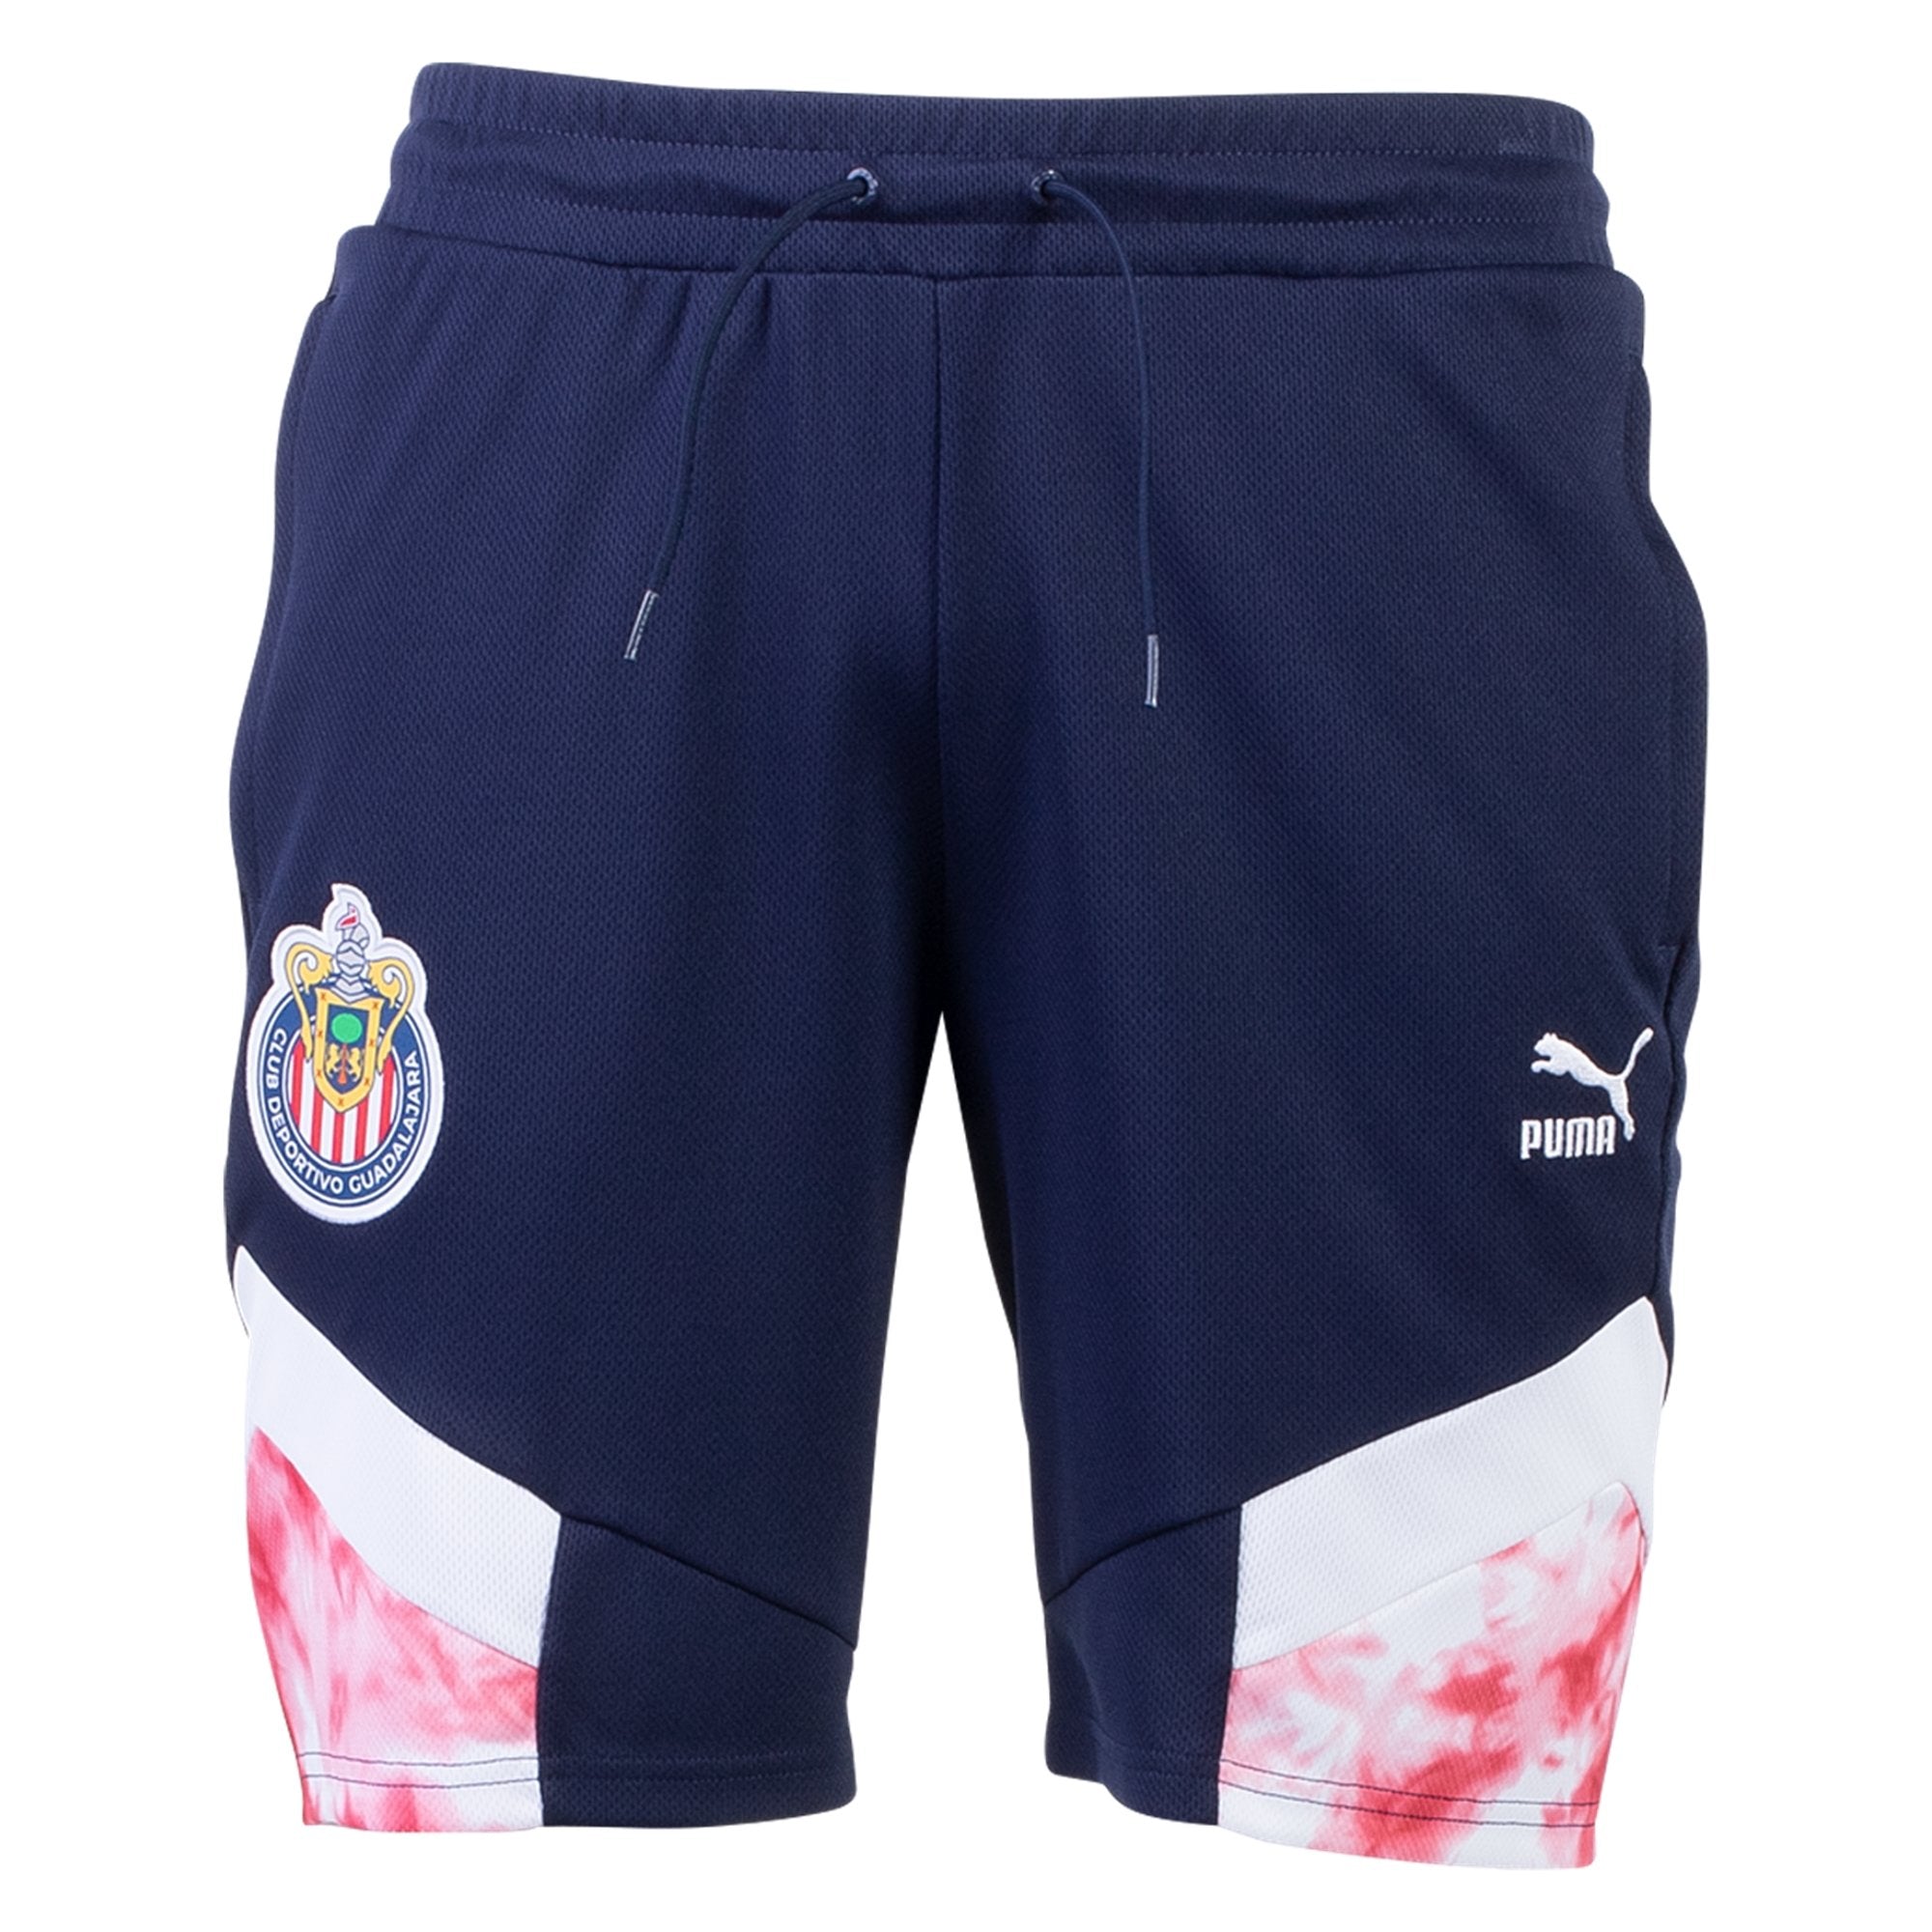 Men's Chivas Iconic Mesh Shorts